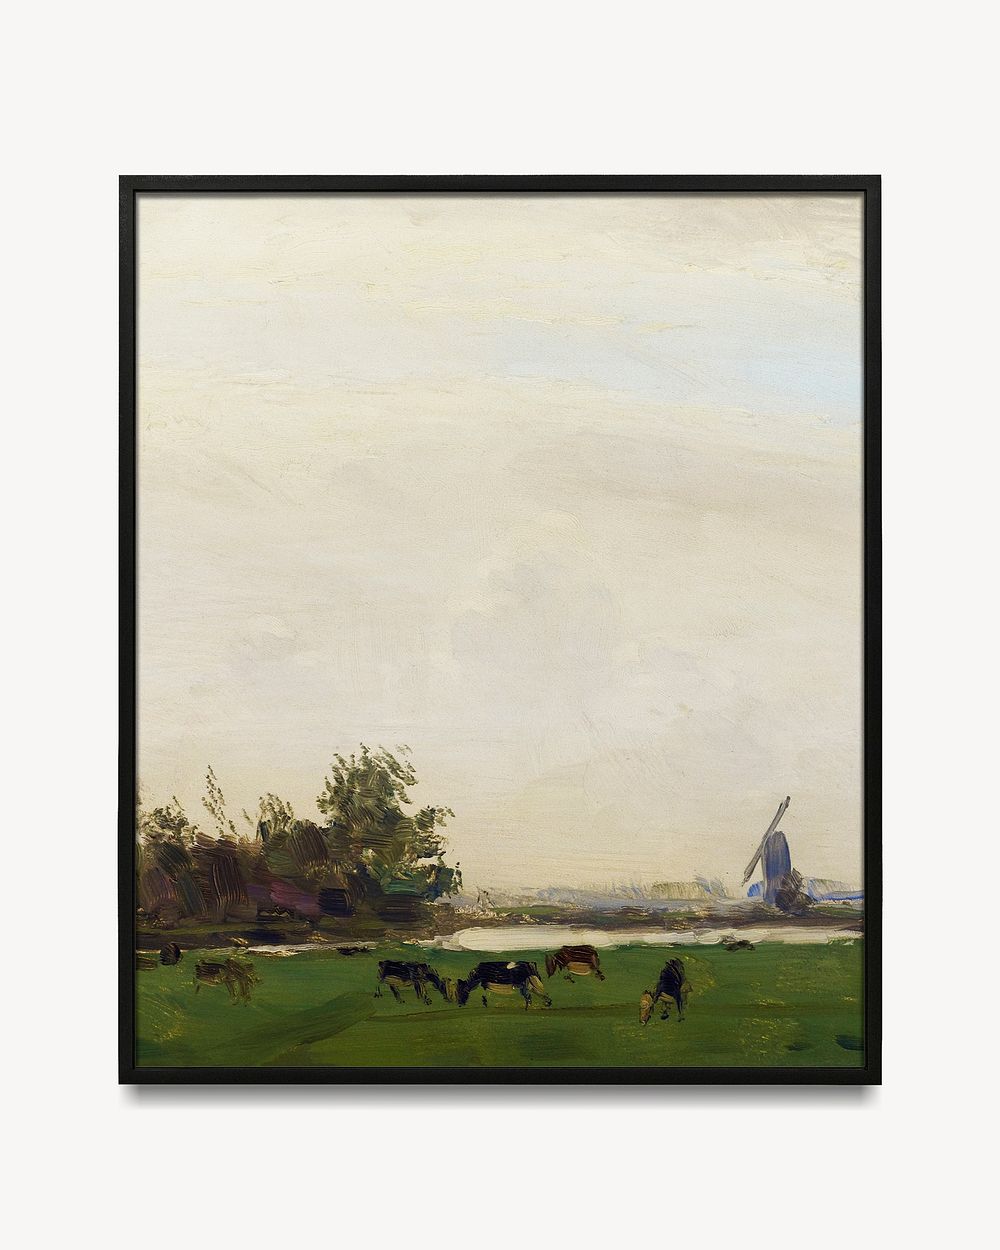 Meadow landscape illustration in frame